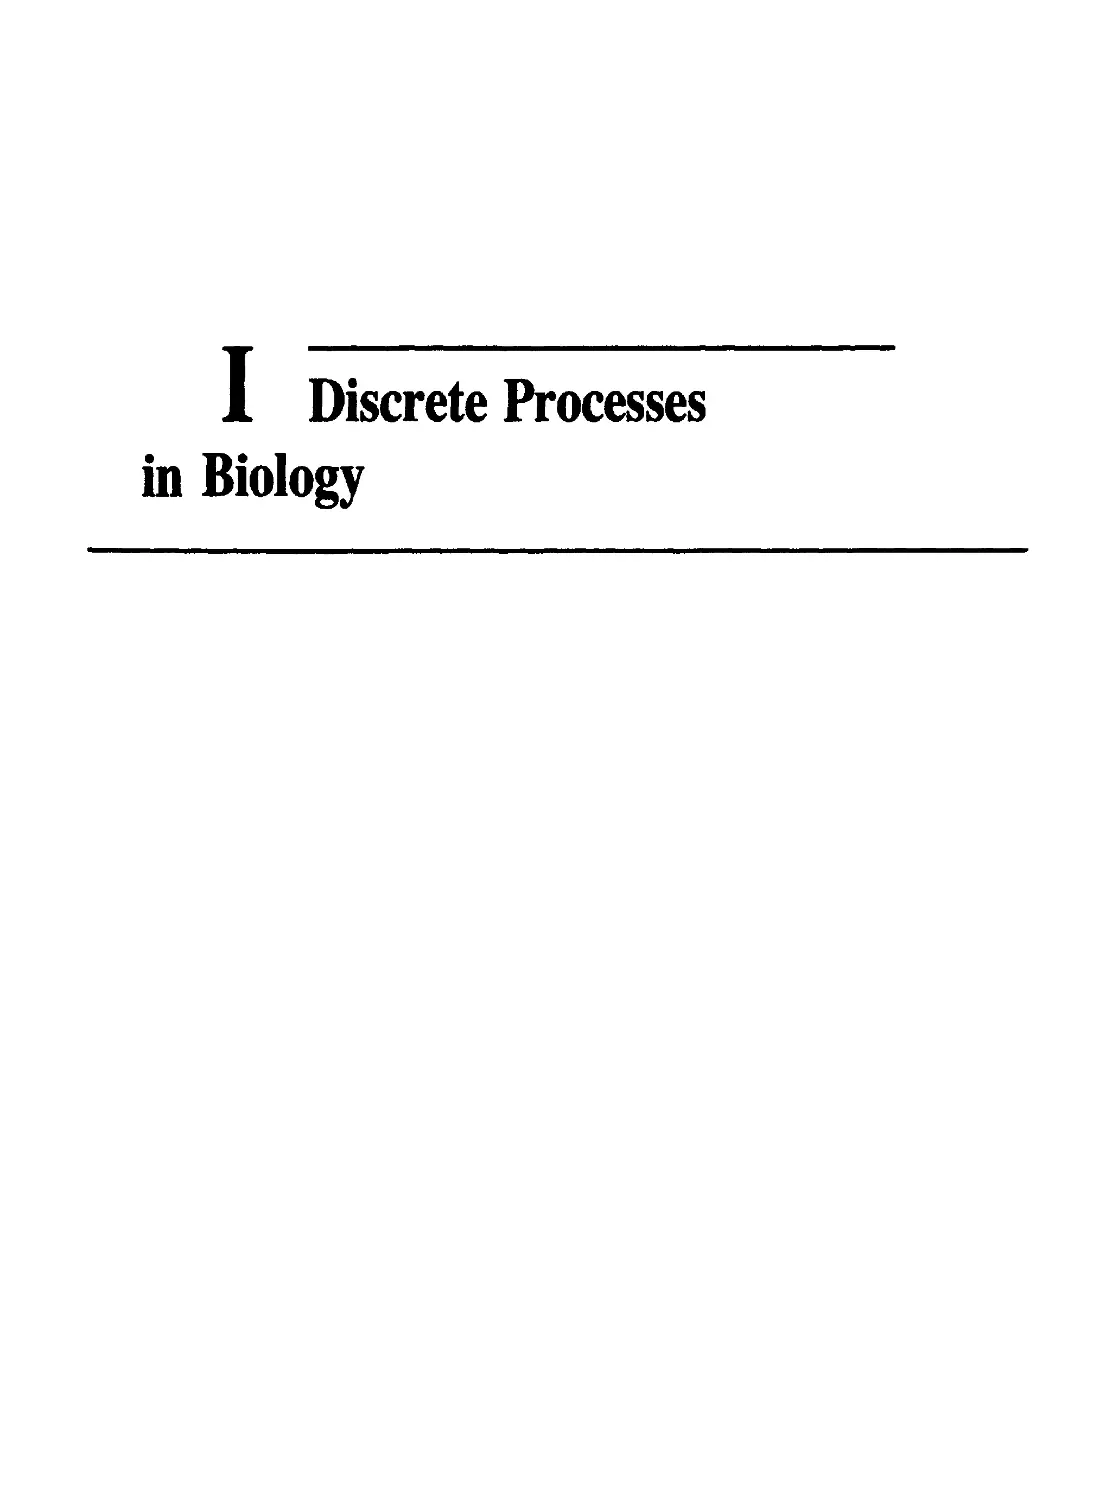 Part I Discrete Processes in Biology